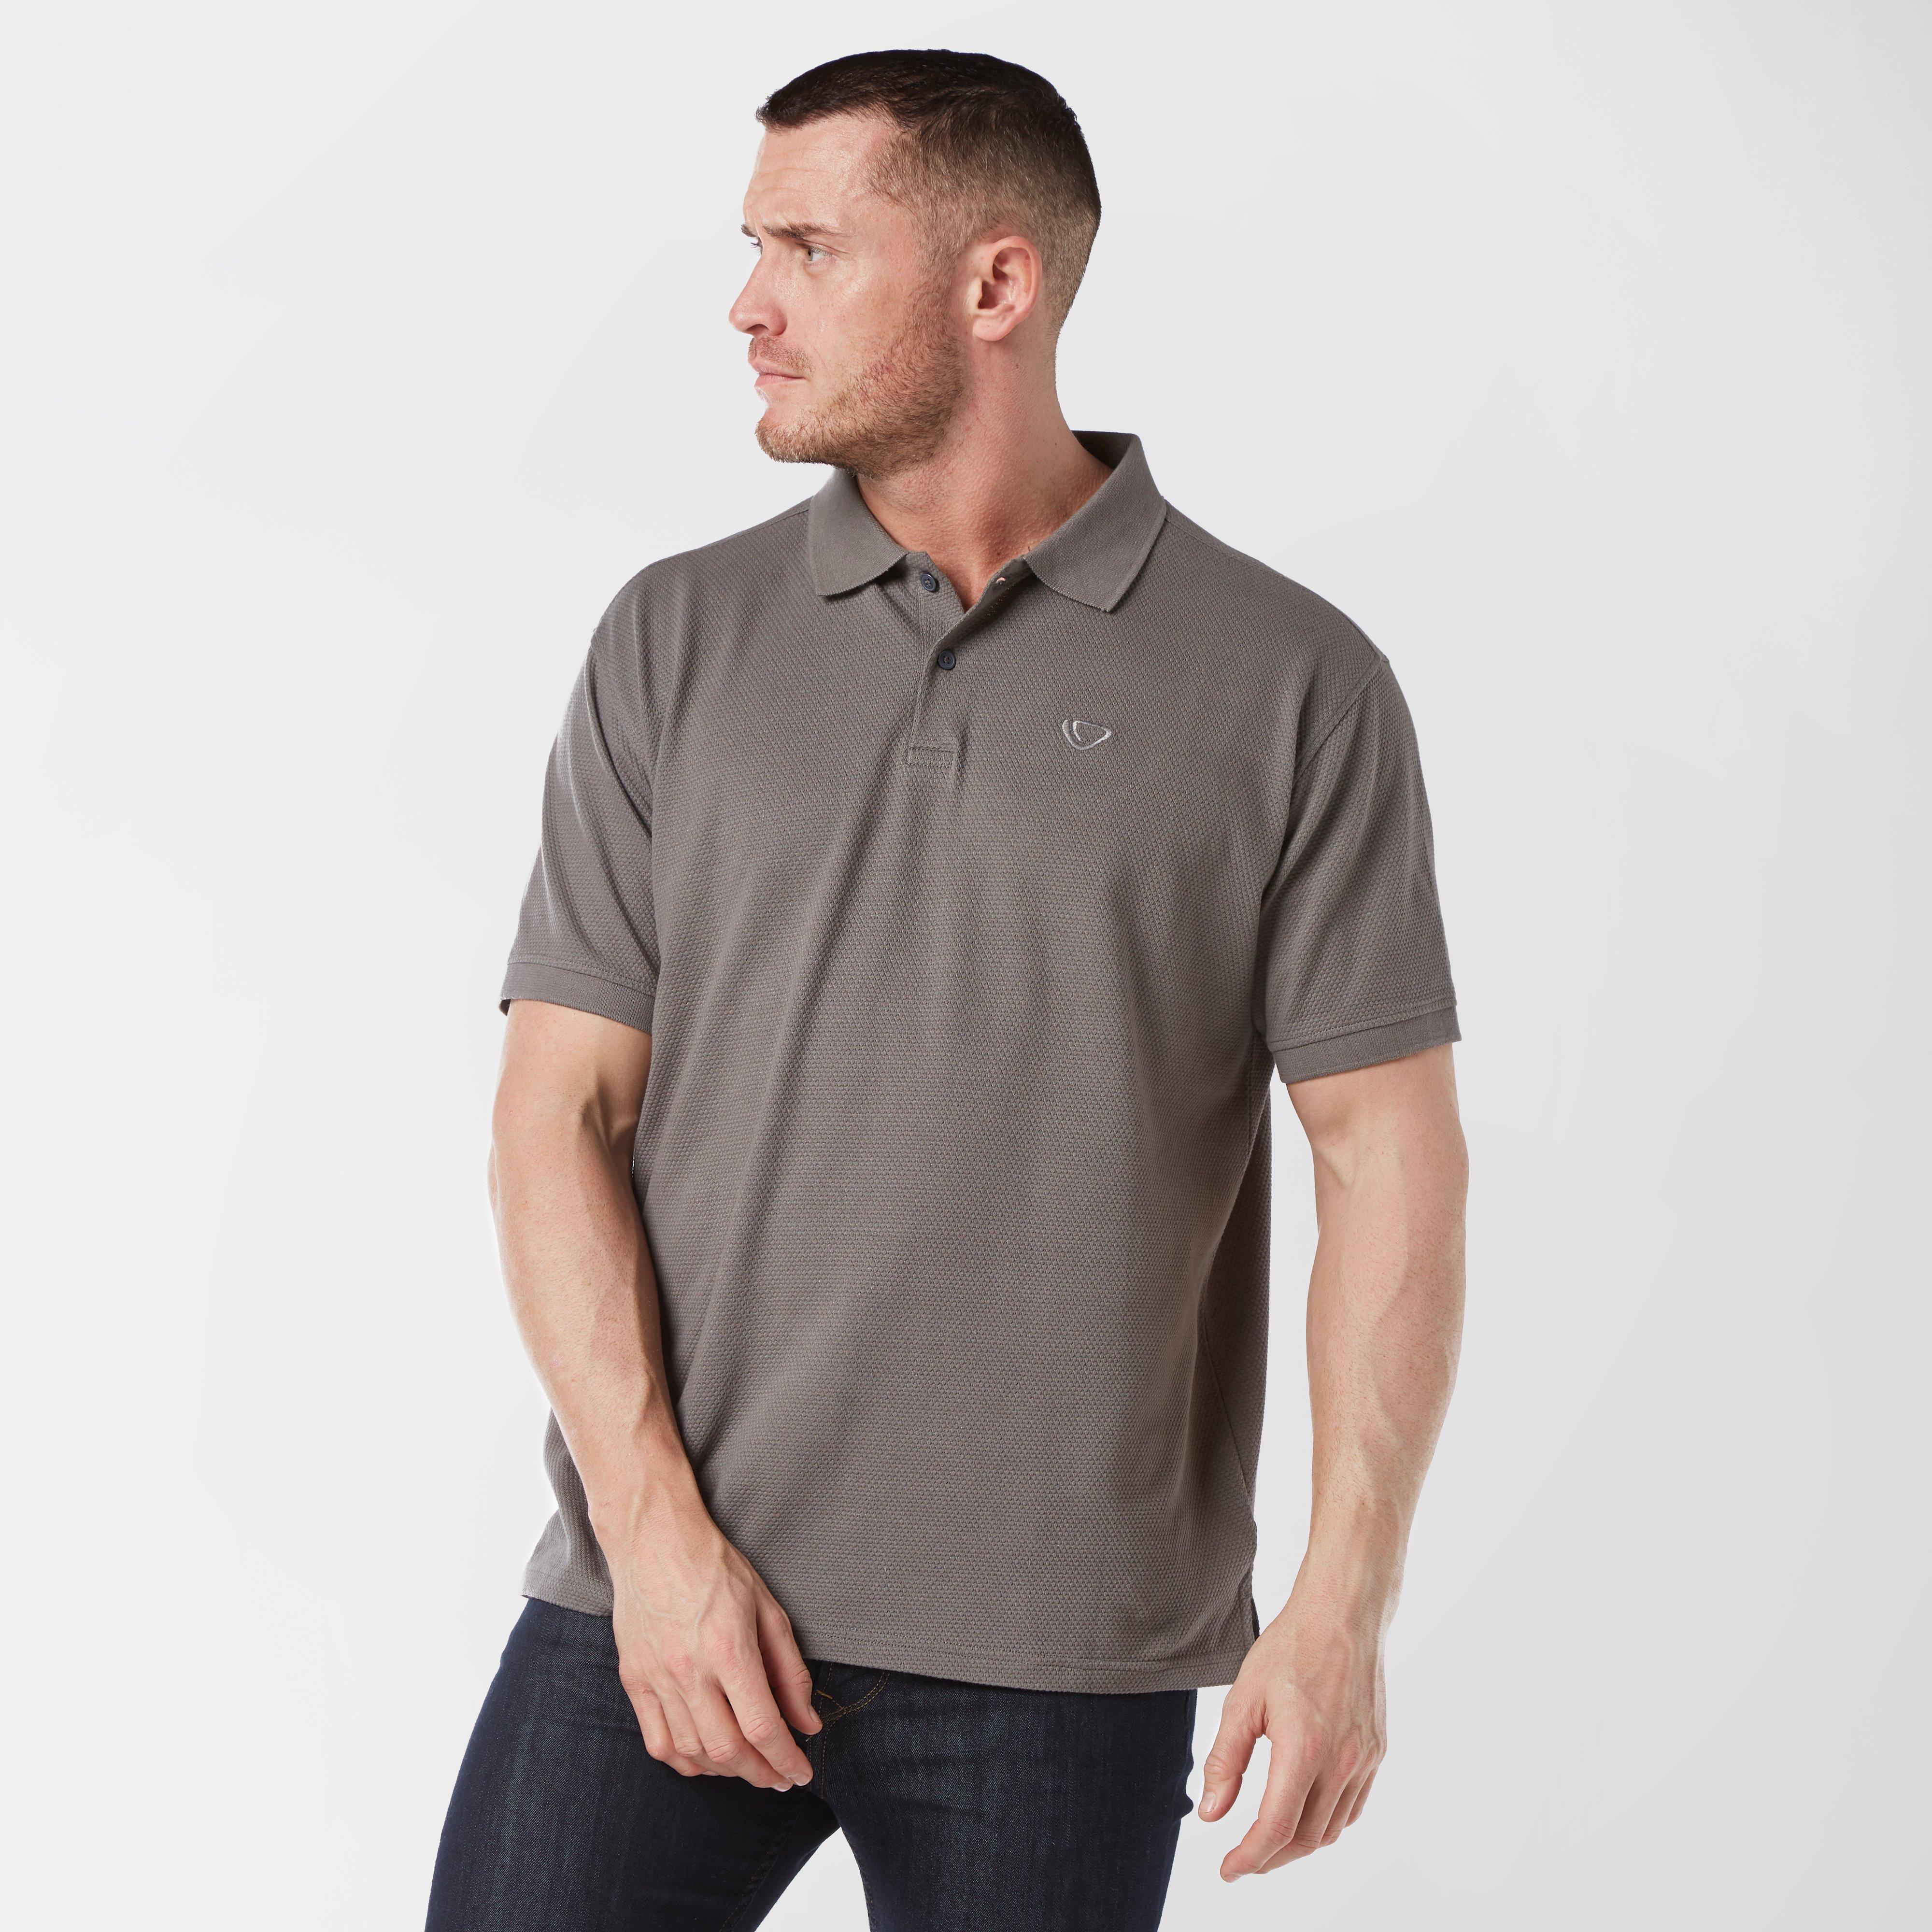 Brasher Mens Polo Shirt - Grey/dgy  Grey/dgy